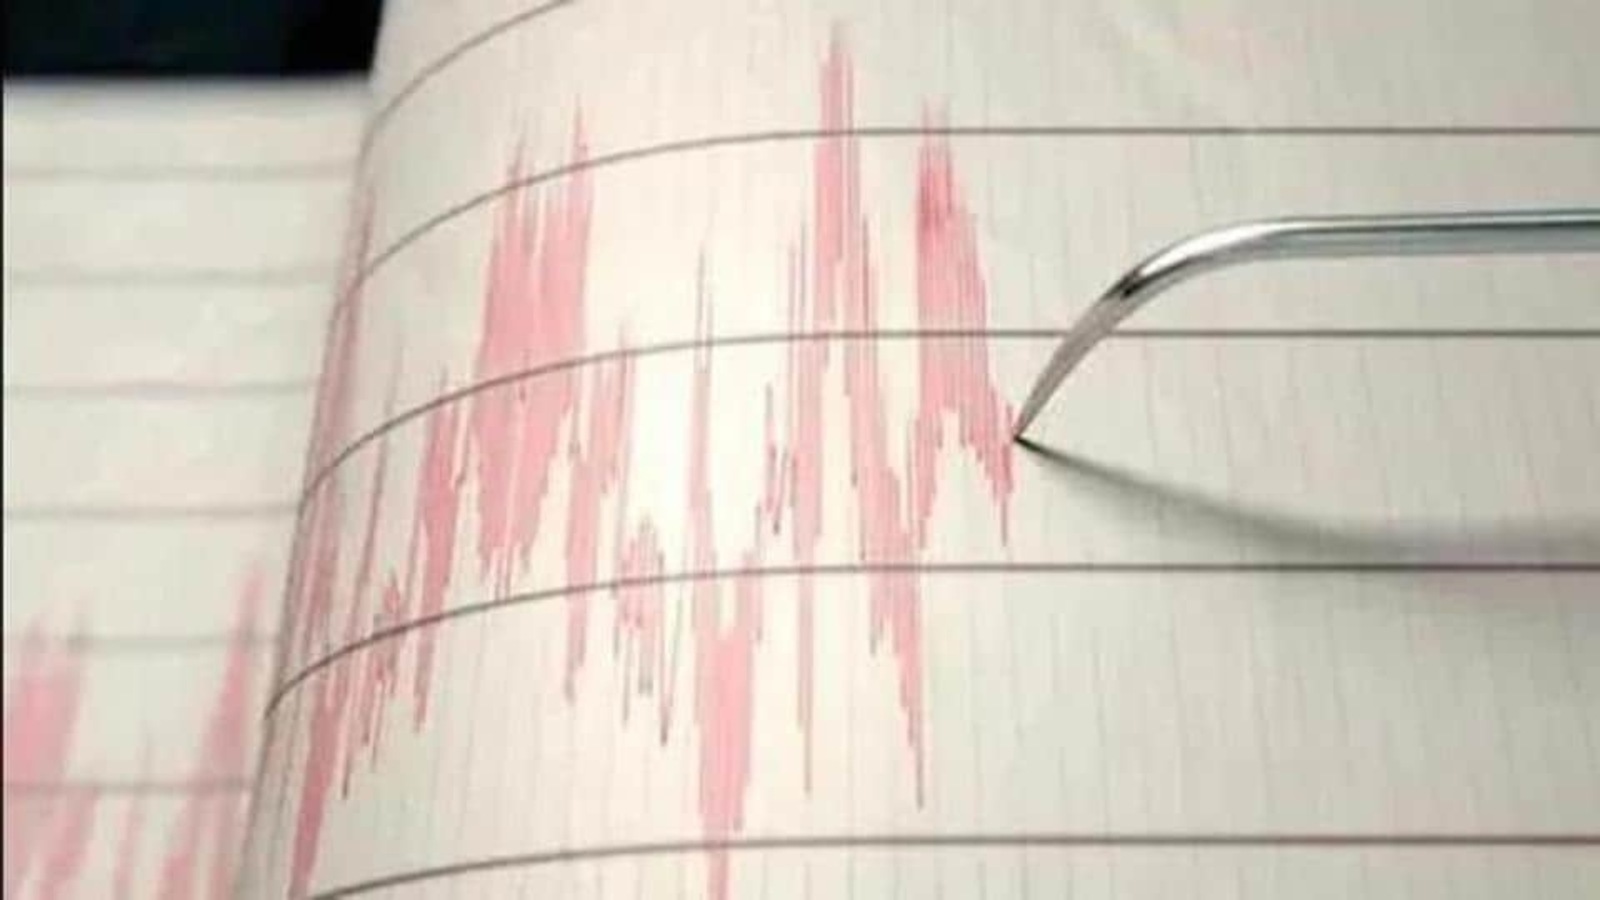 Earthquake of 6.5 magnitude hits Argentina